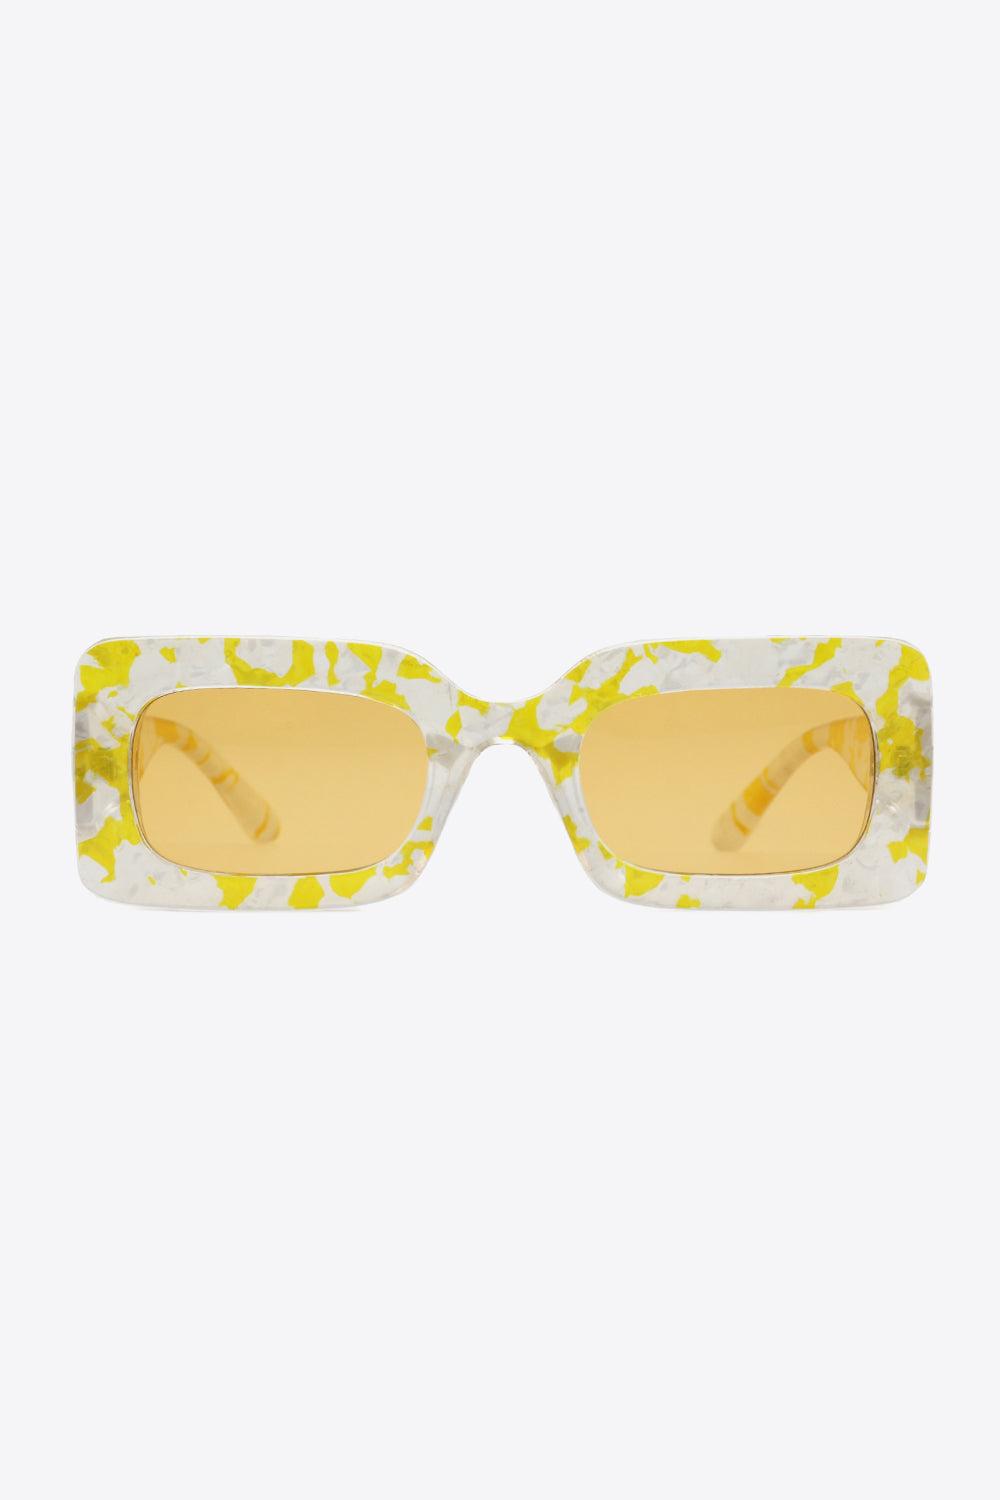 Tortoiseshell Rectangle Polycarbonate Sunglasses - Shop women apparel, Jewelry, bath & beauty products online - Arwen's Boutique